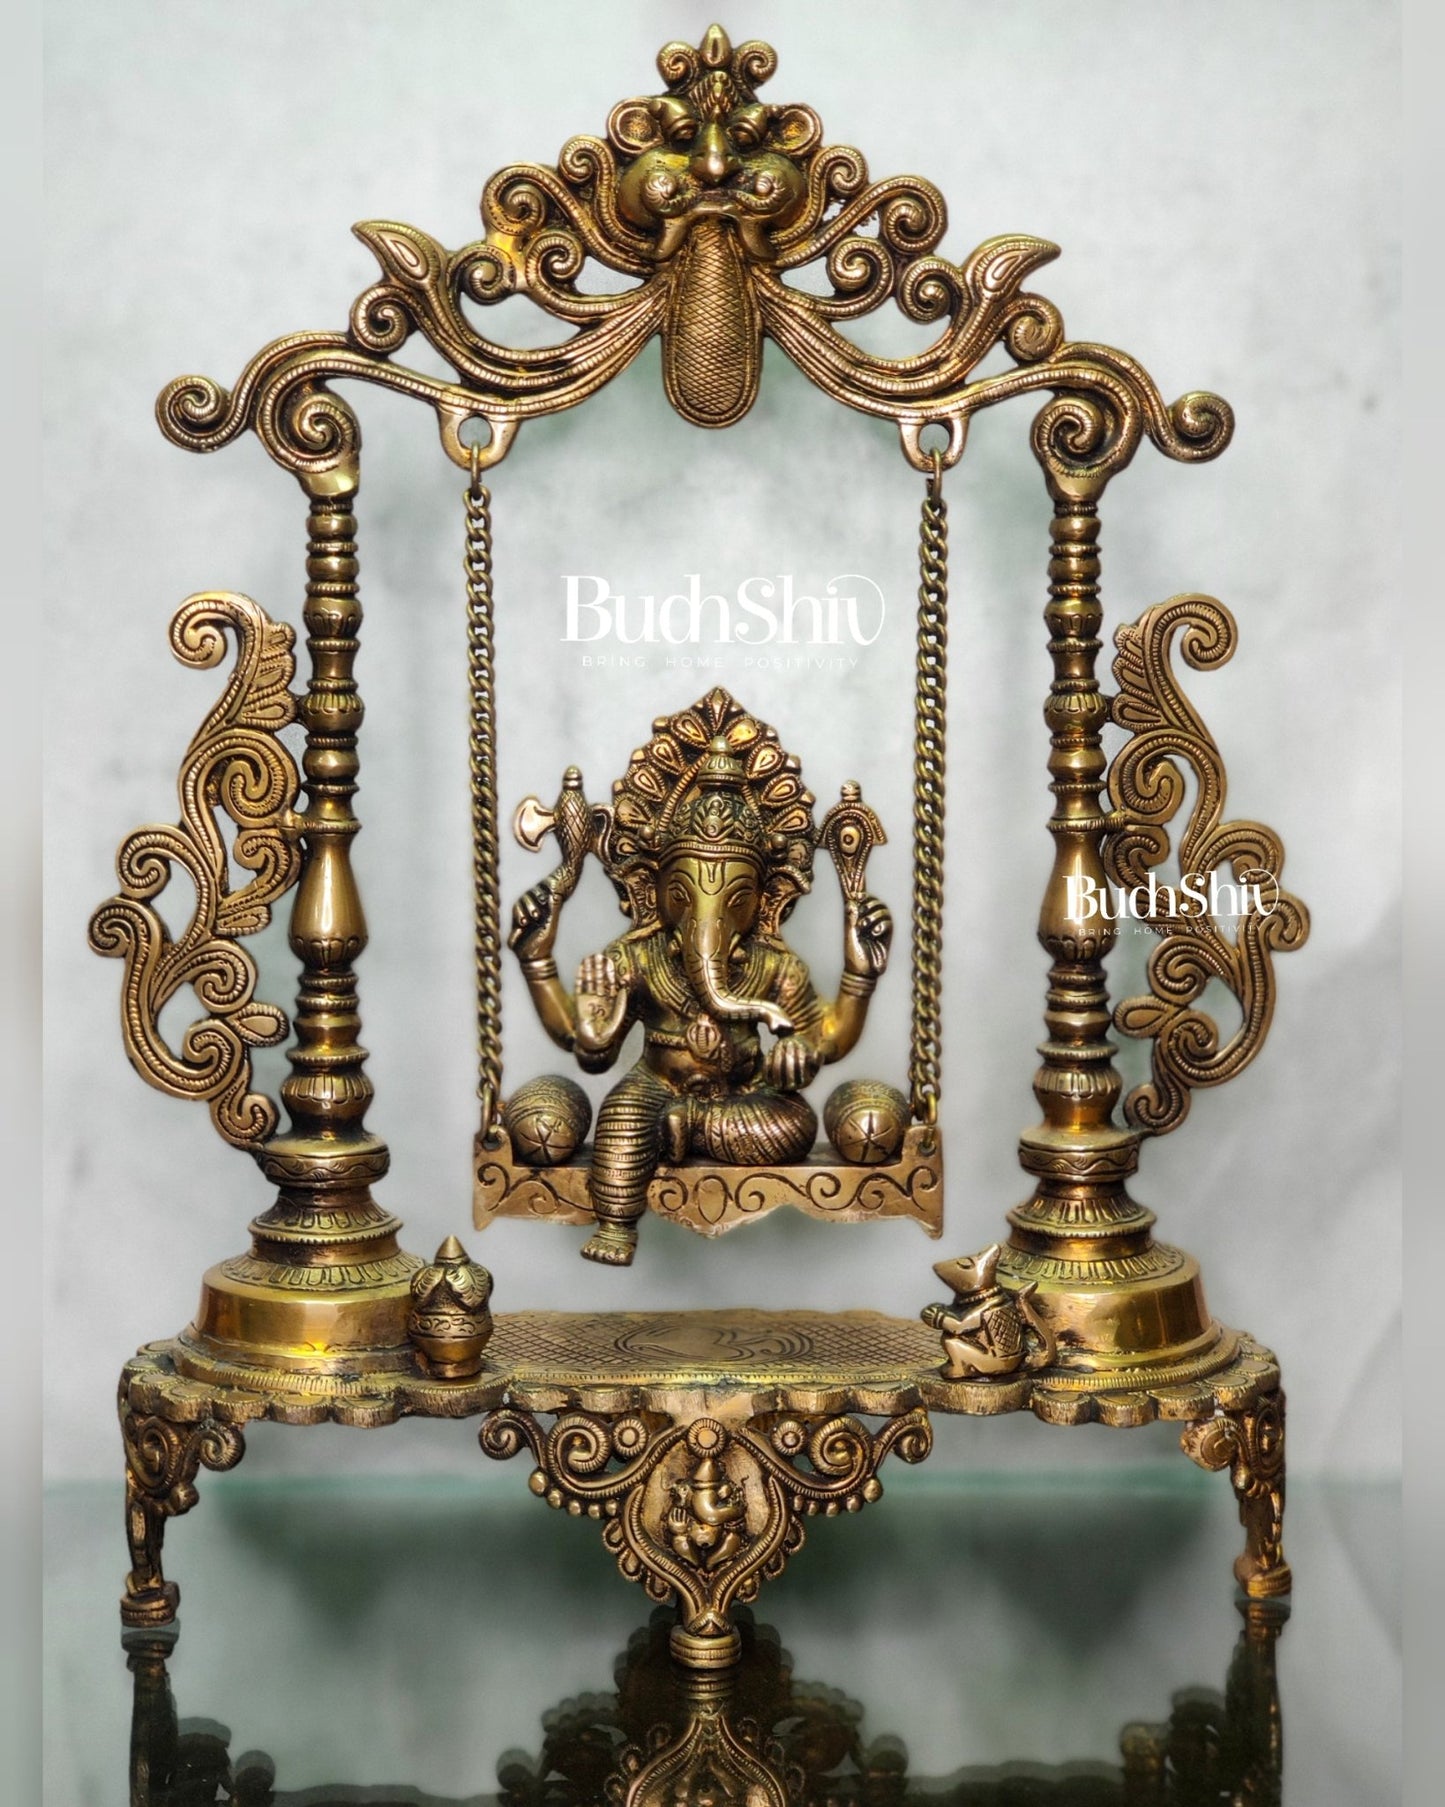 Kirtimukha Ganesha on an engraved Swing Made of brass - Budhshiv.com